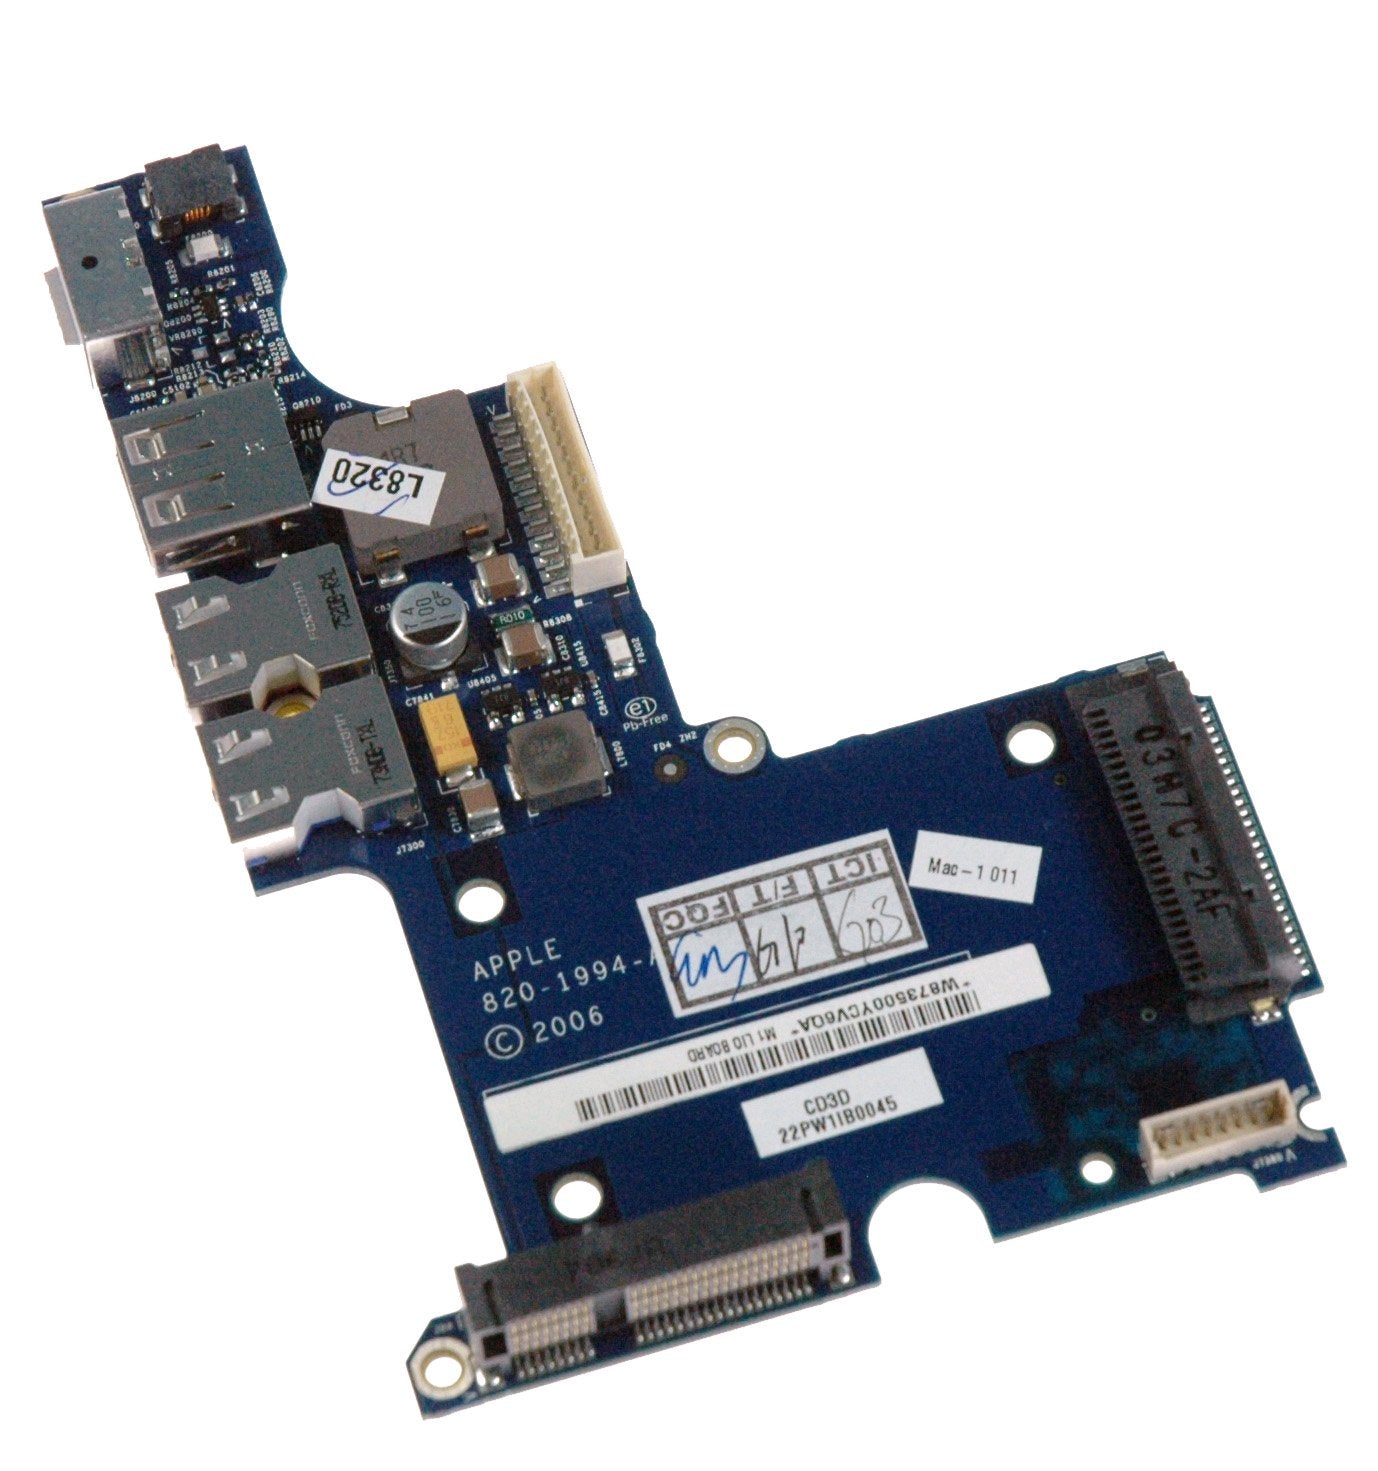 V12.05 XGecu T56 Universal USB Programmer 56 Pin Drivers Support 33000+ ICS  for ROM/Flash, Nor/NAND, EMMC/EMCP, PLD/GAL/CPLD, SRAM/NVRAM, 8051/PIC/AVR